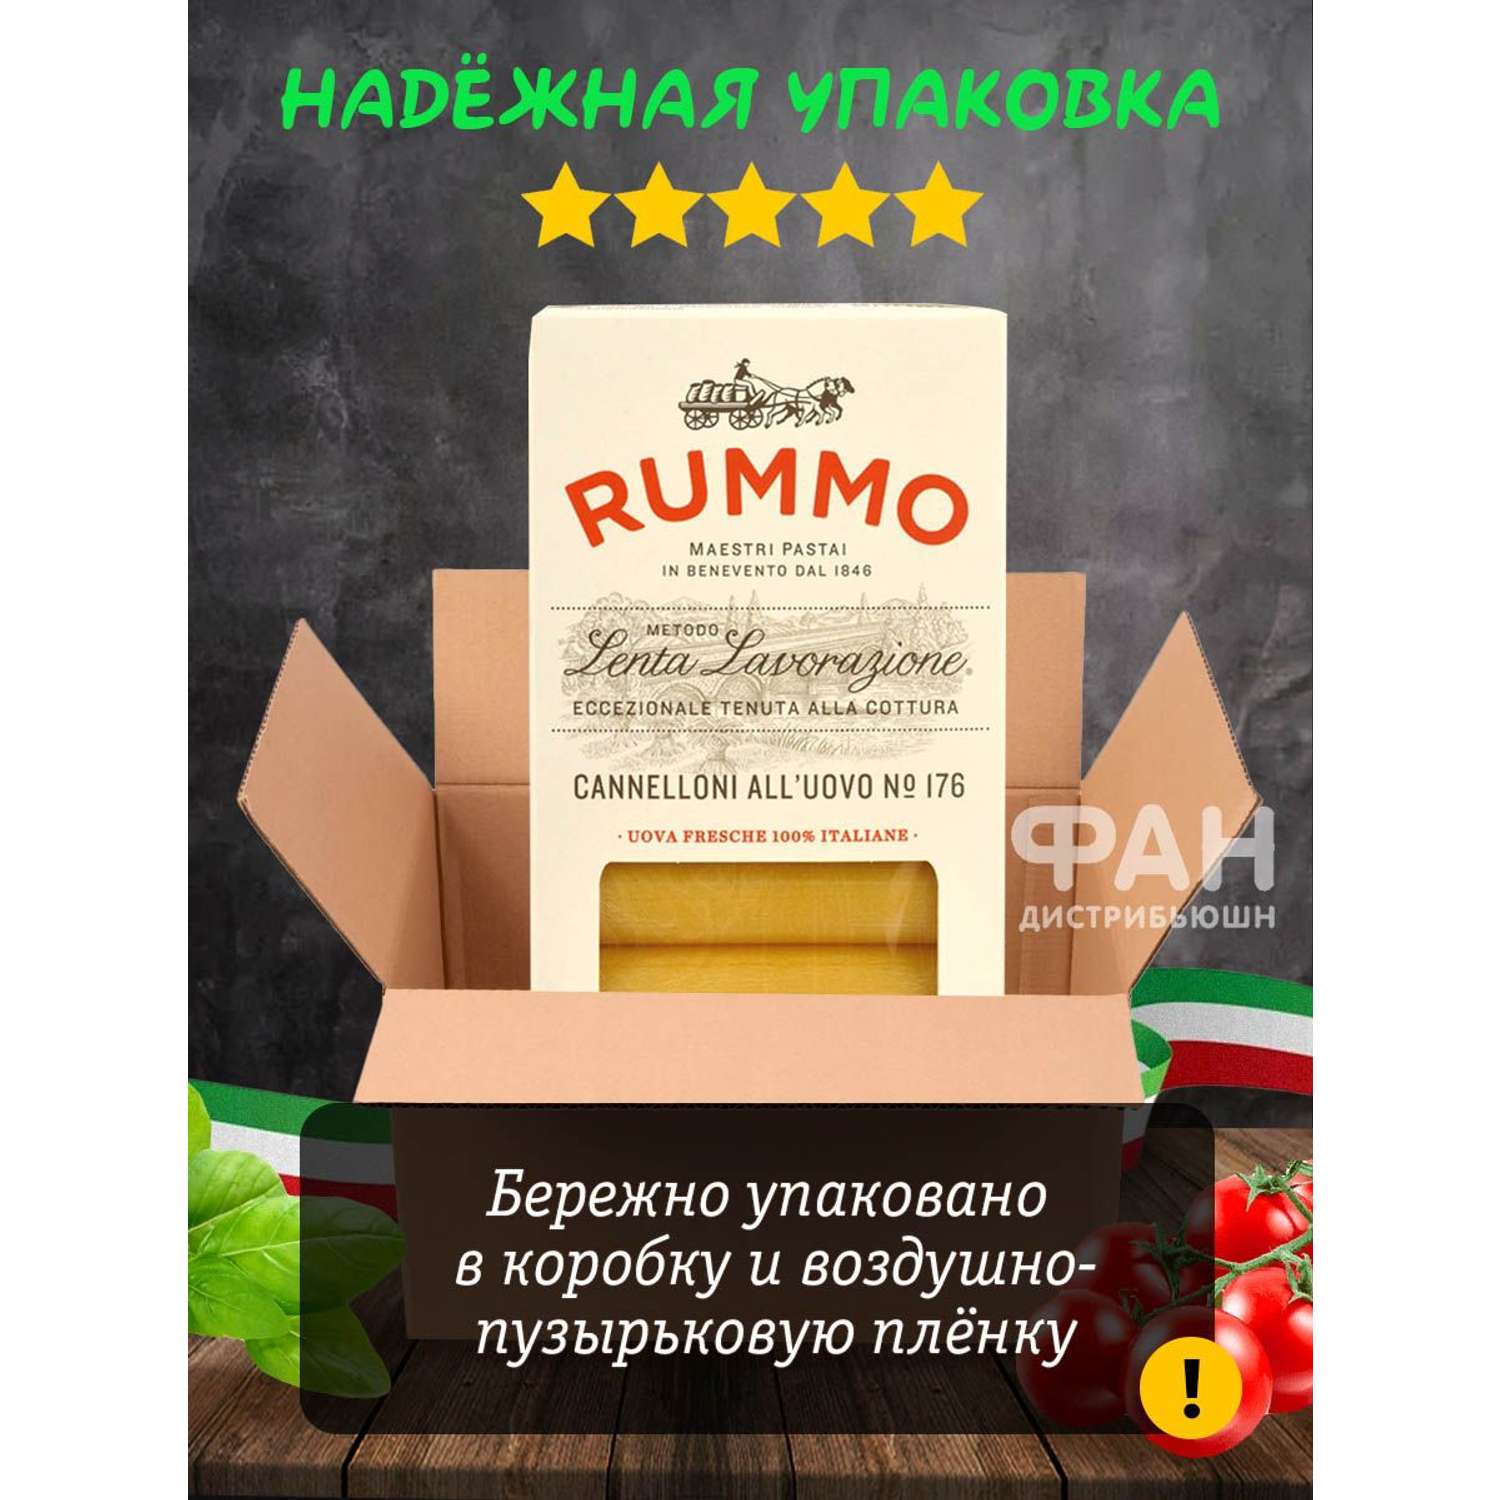 Макароны Rummo паста Упаковка из 3-х пачек гнезда Каннеллони ниди аль уово n.176 3x250 г - фото 10